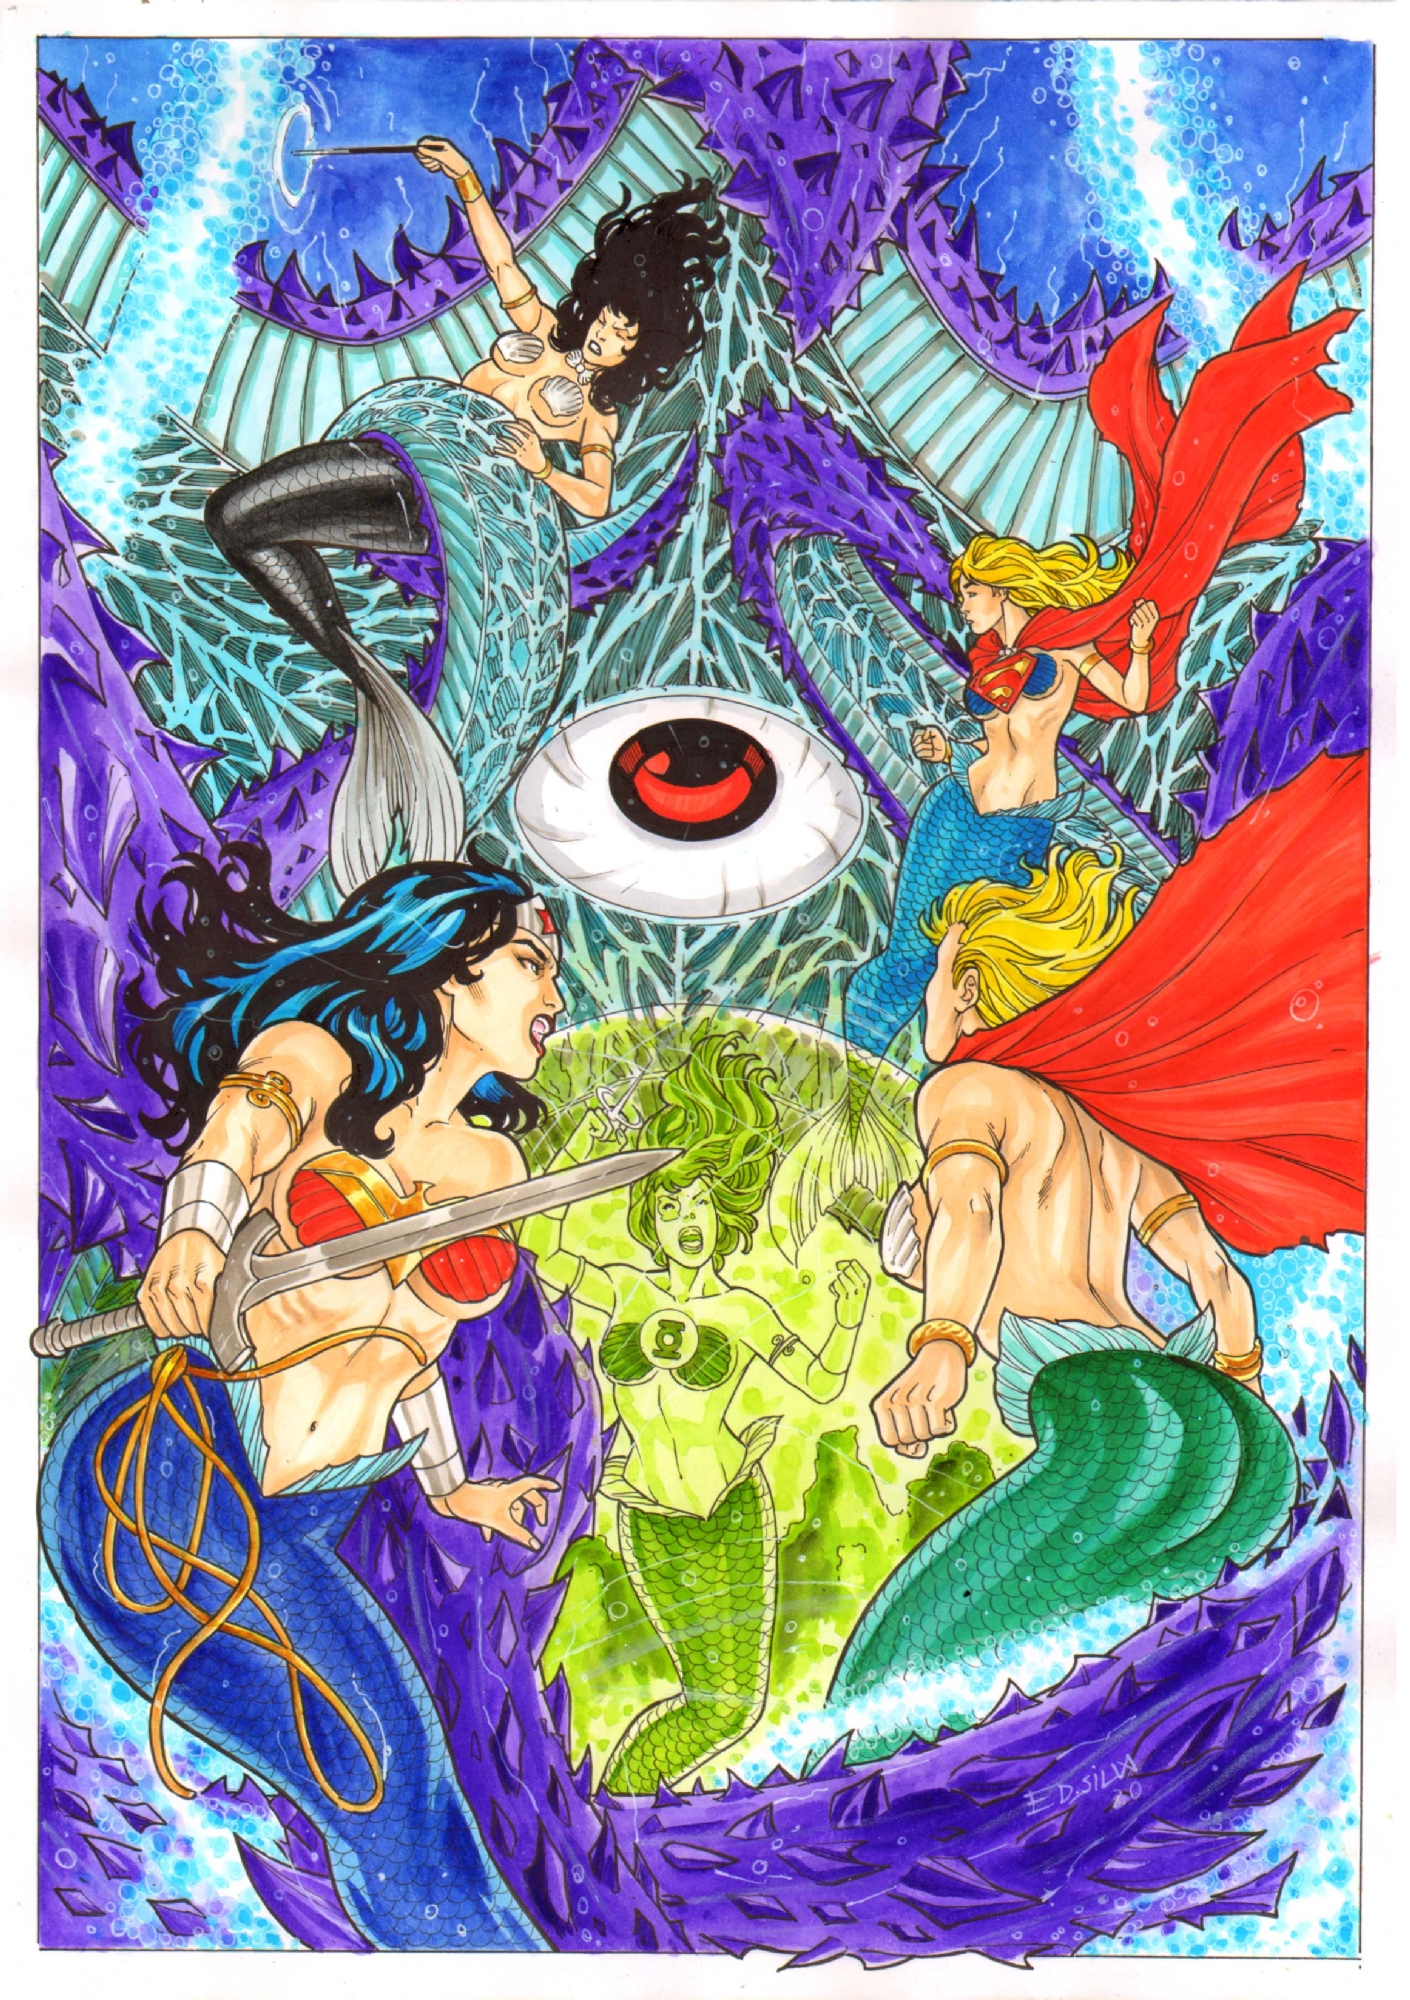 Justice League Mermaids vs Starro, in Rico Arts's ED (Ed Silva